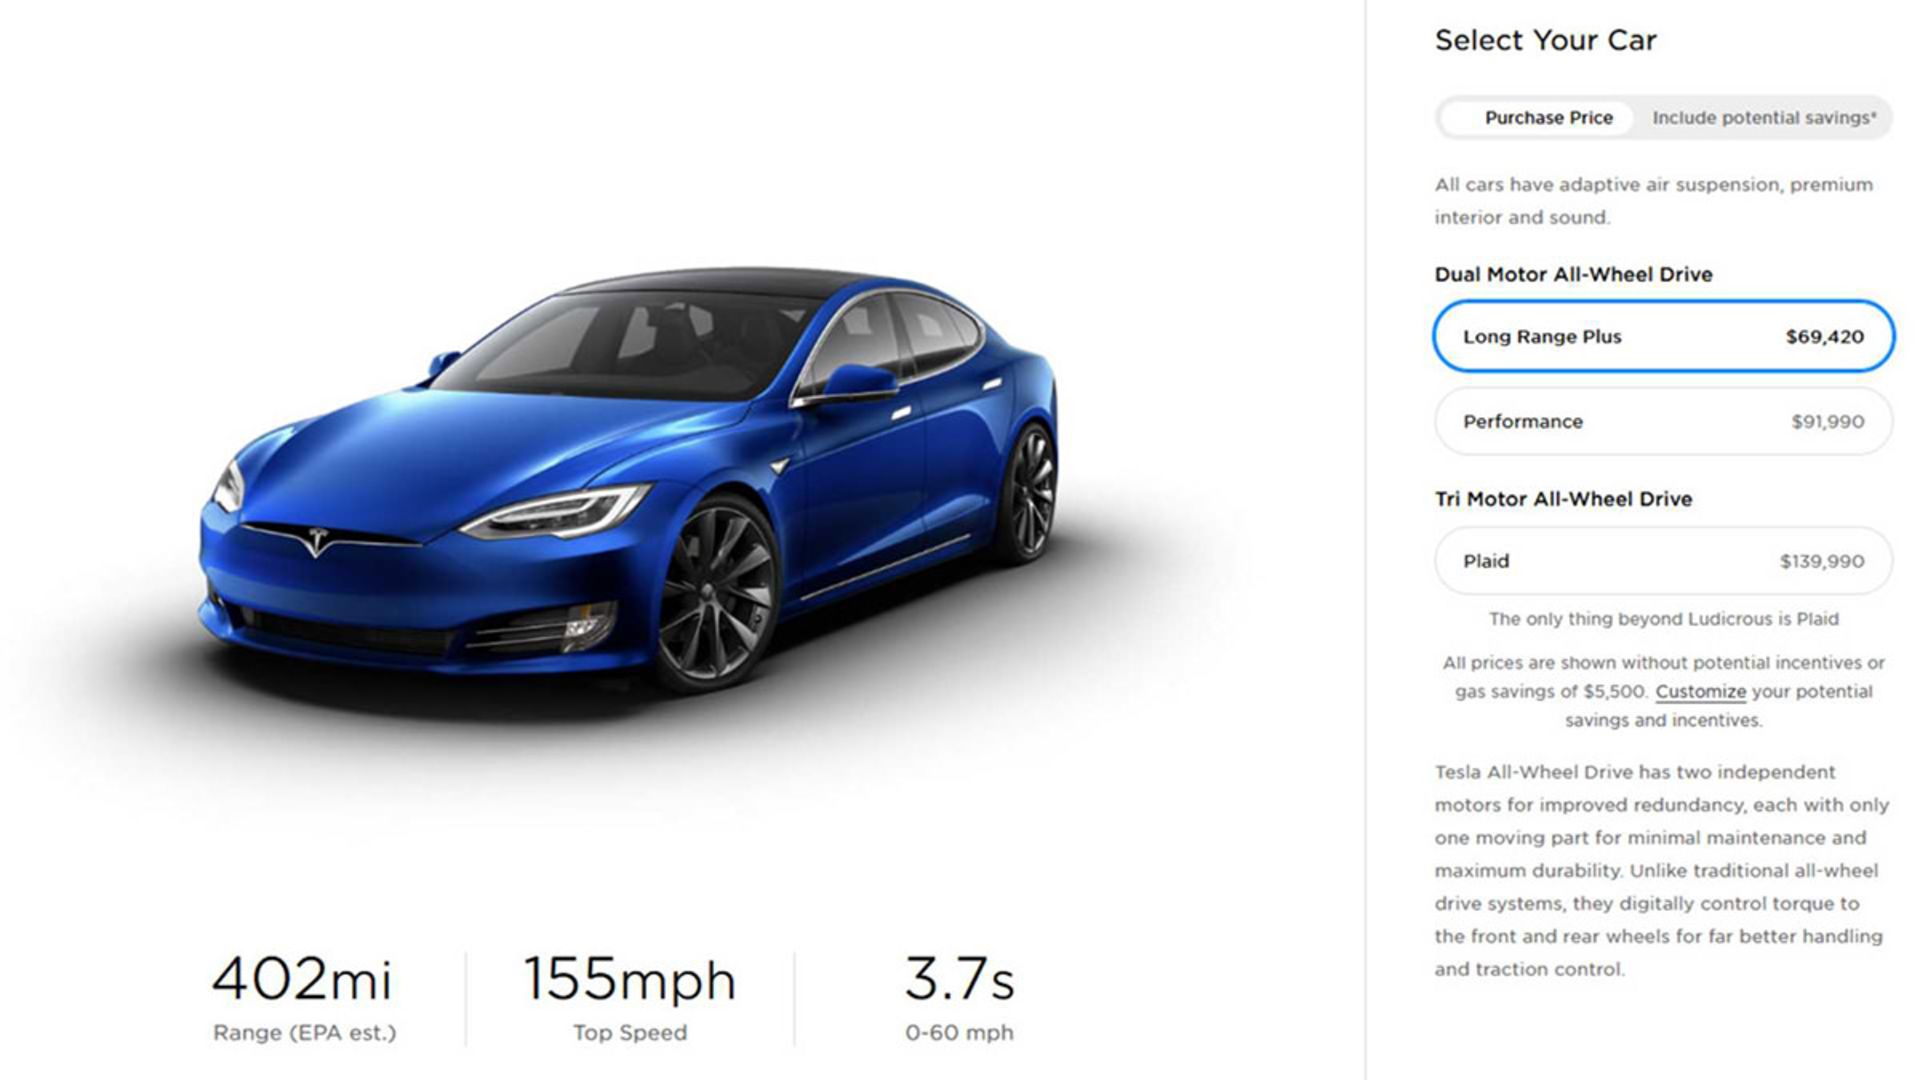 قیمت خودروی الکتریکی تسلا مدل اس / Tesla model S آبی رنگ